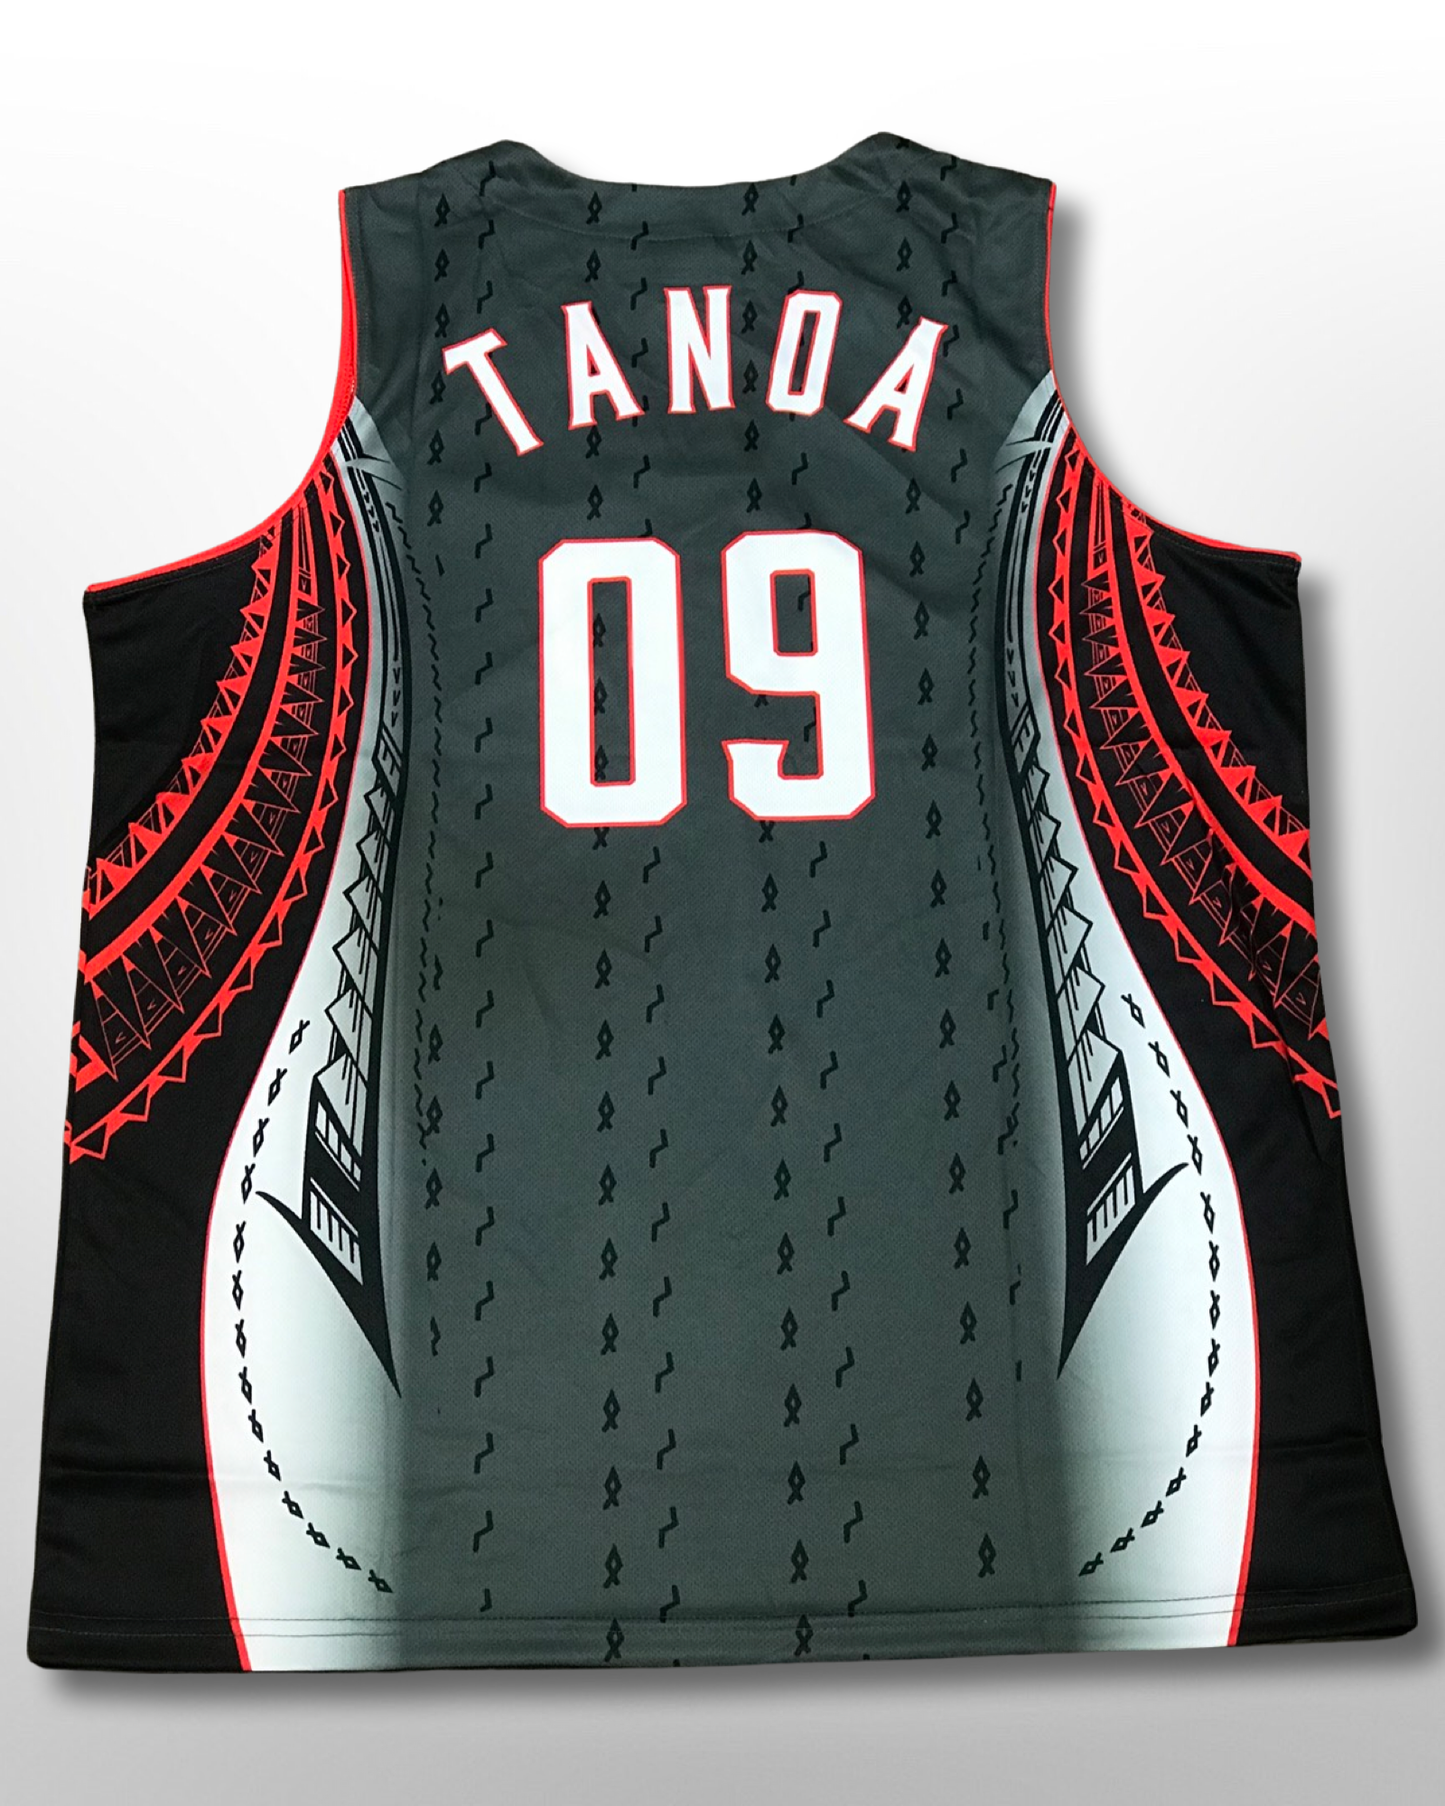 Tanoa Basketball Vest Vasea - TM1903 - Black